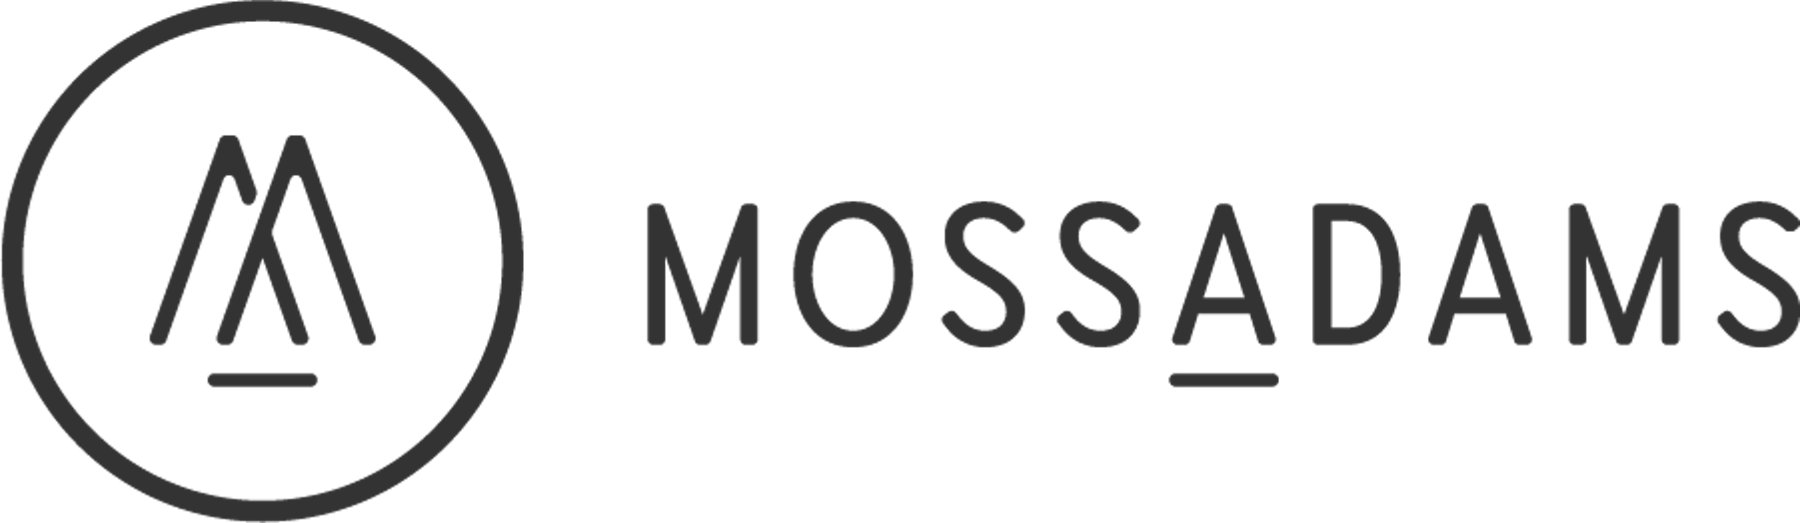 Moss Adams Logo 1 C black png